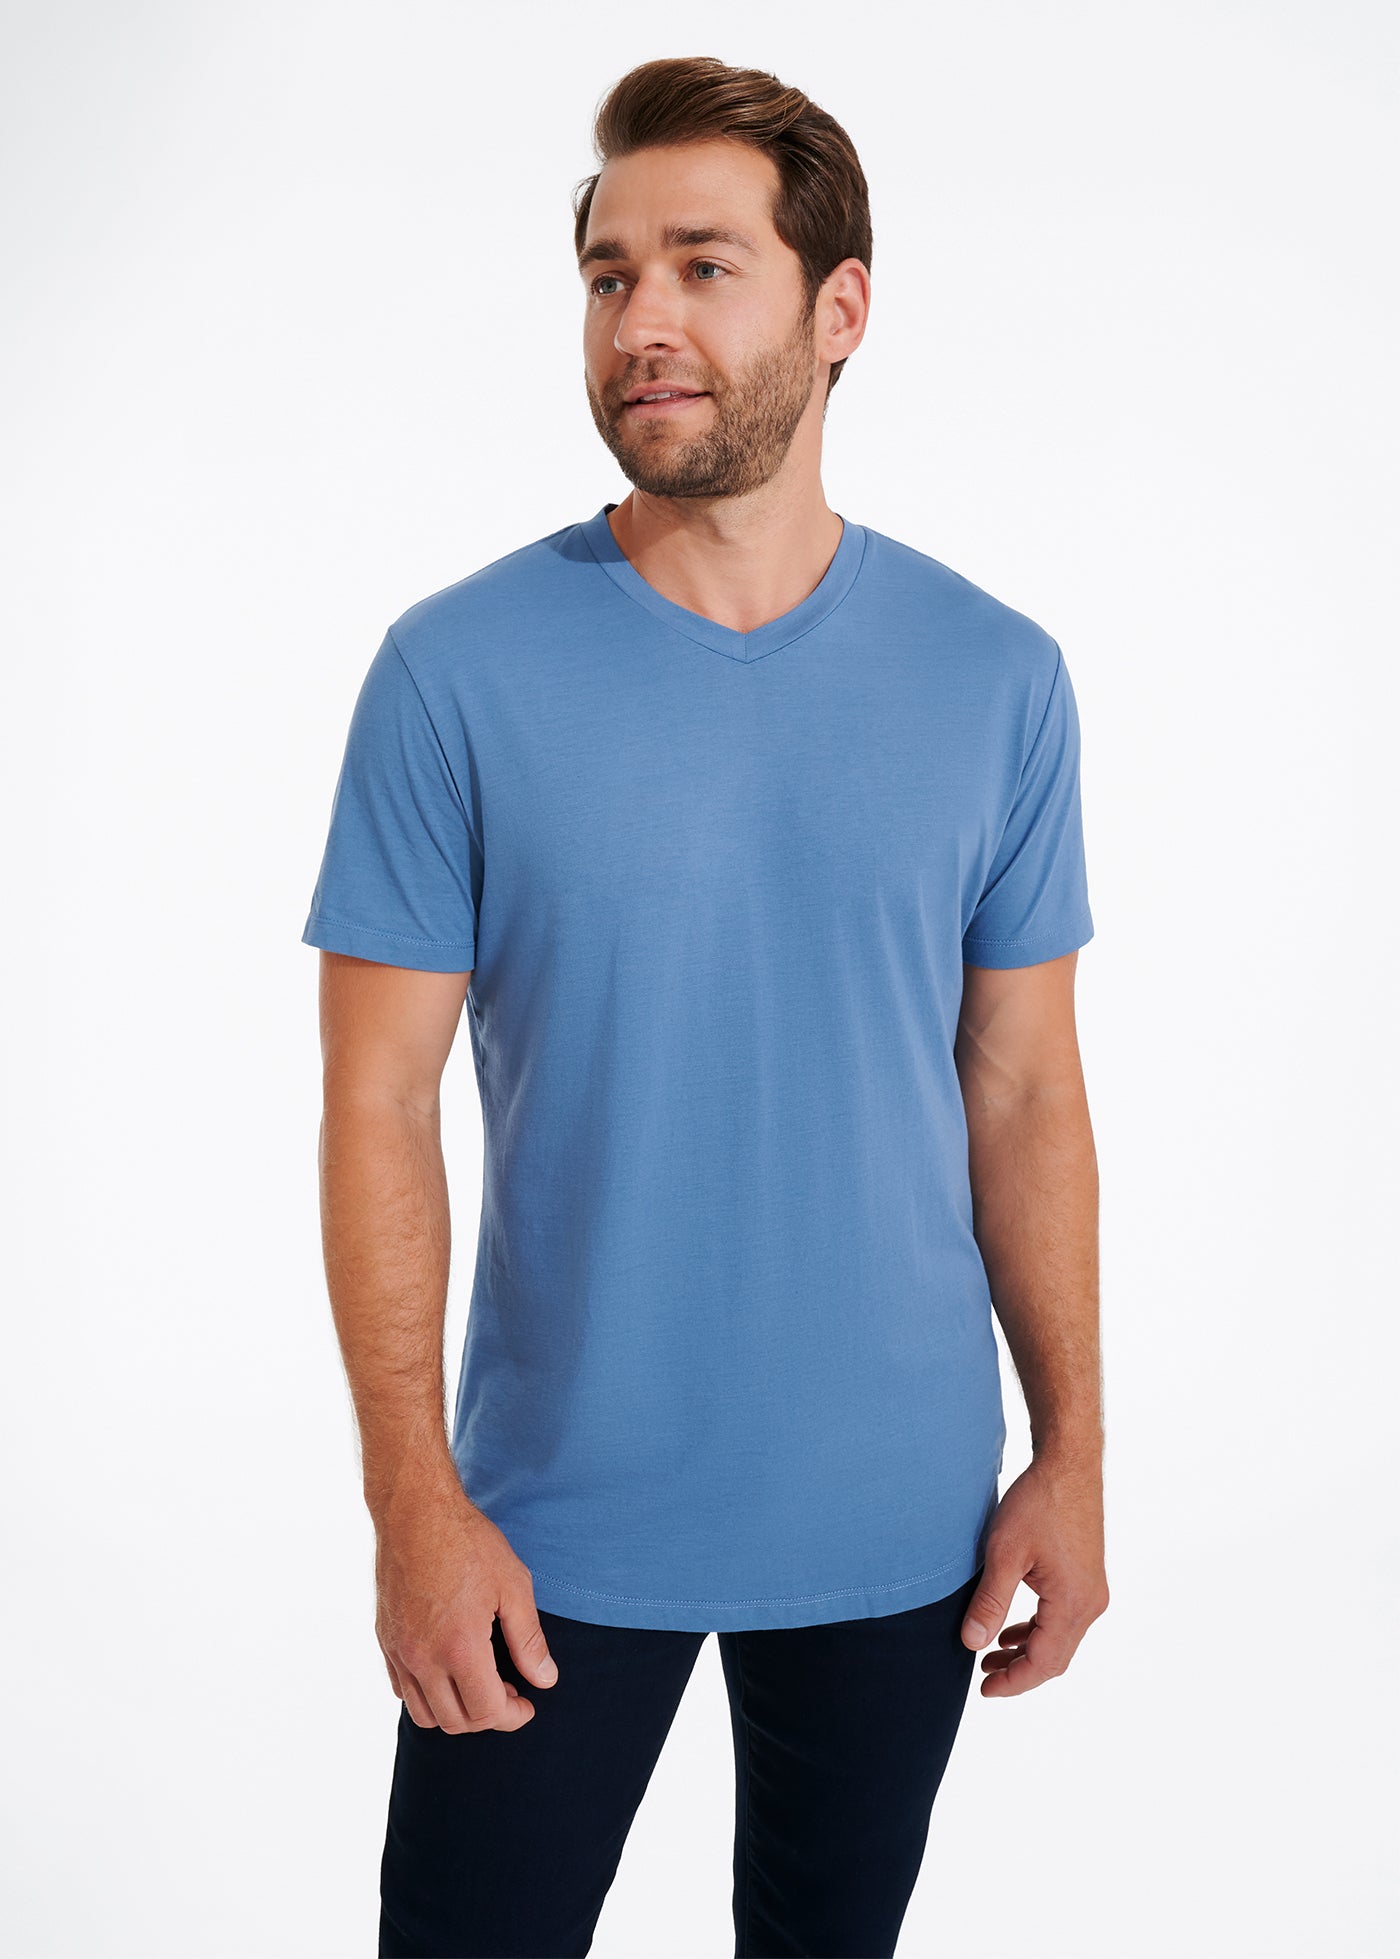 Men's Stretch Shirts, Most Comfortable Men's Shirts | Swet Tailor®